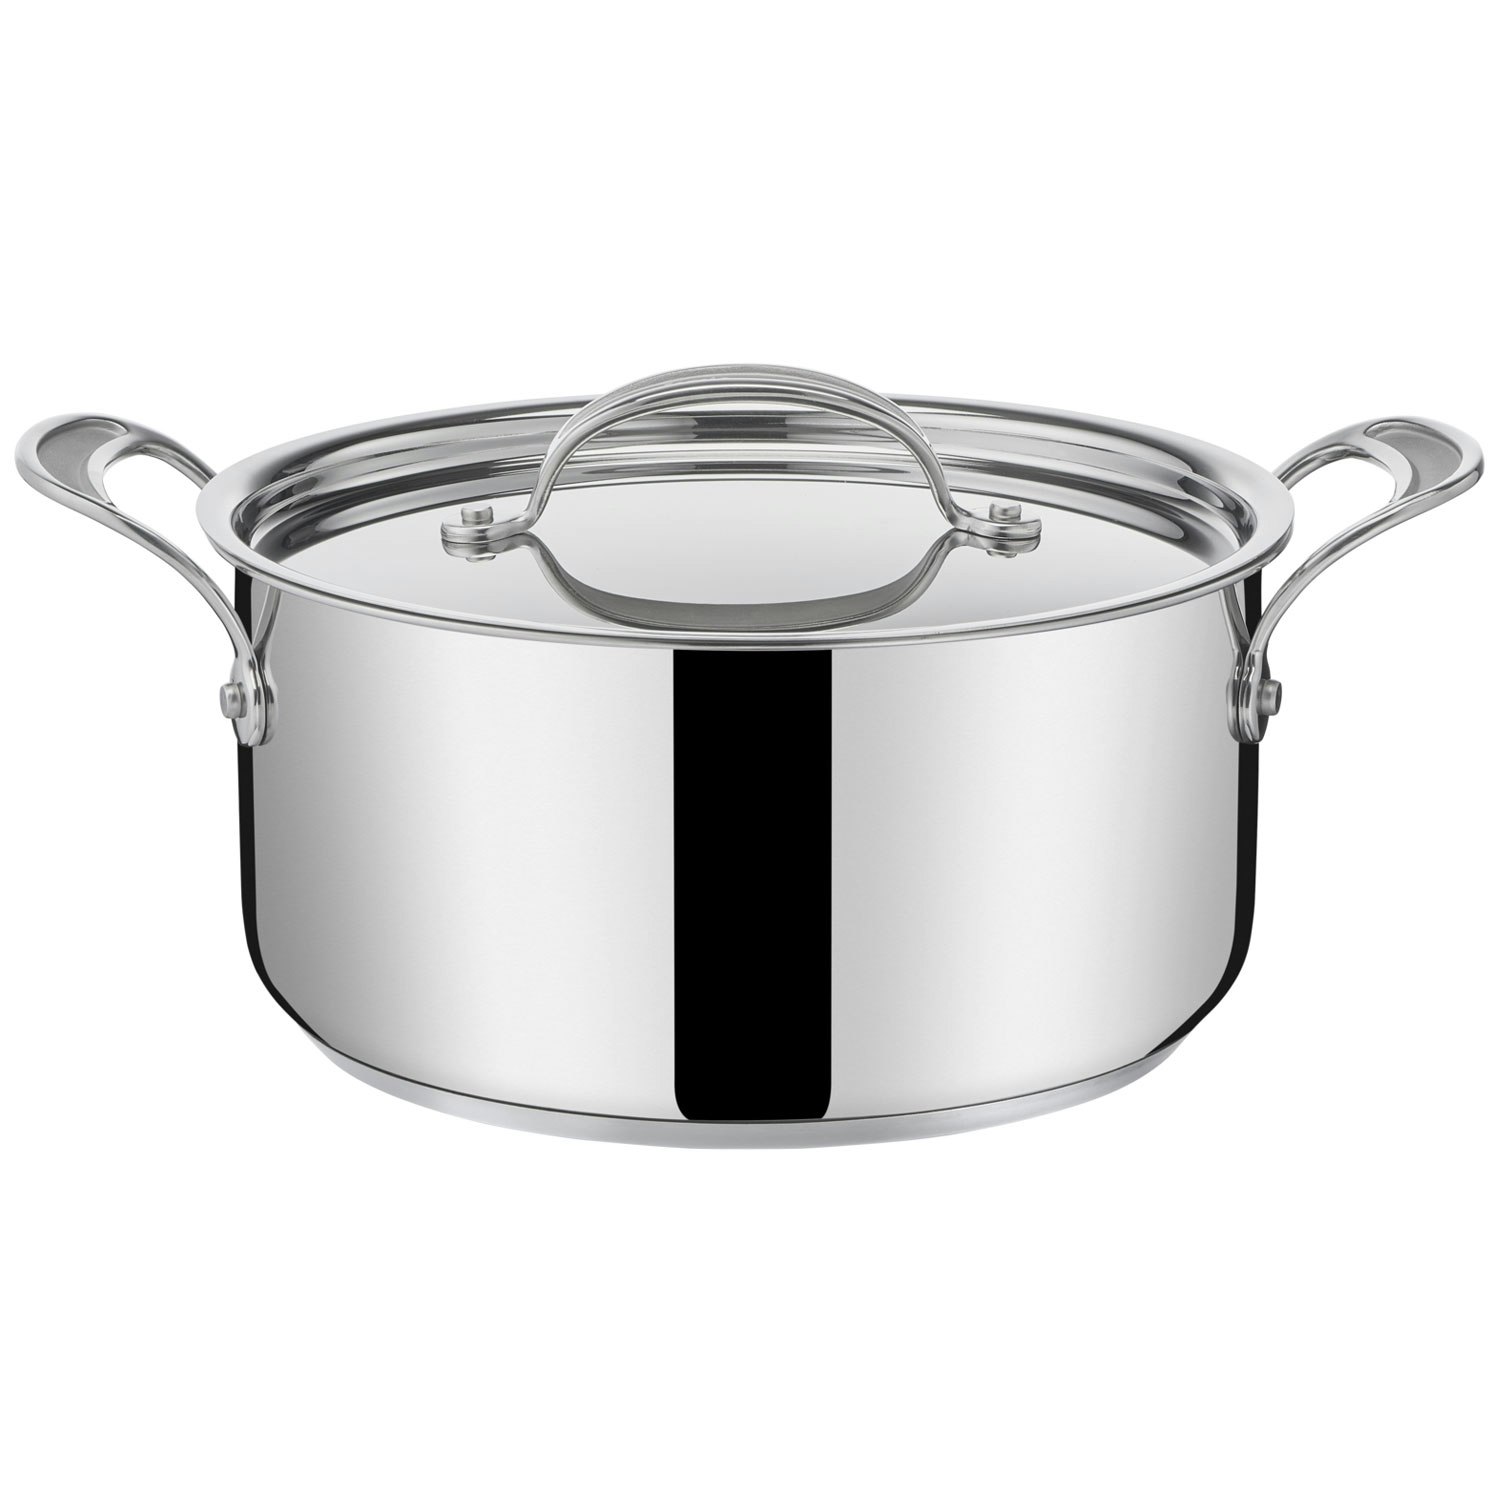 https://royaldesign.com/image/2/tefal-jamie-oliver-cooks-classic-pot-stainless-steel-4